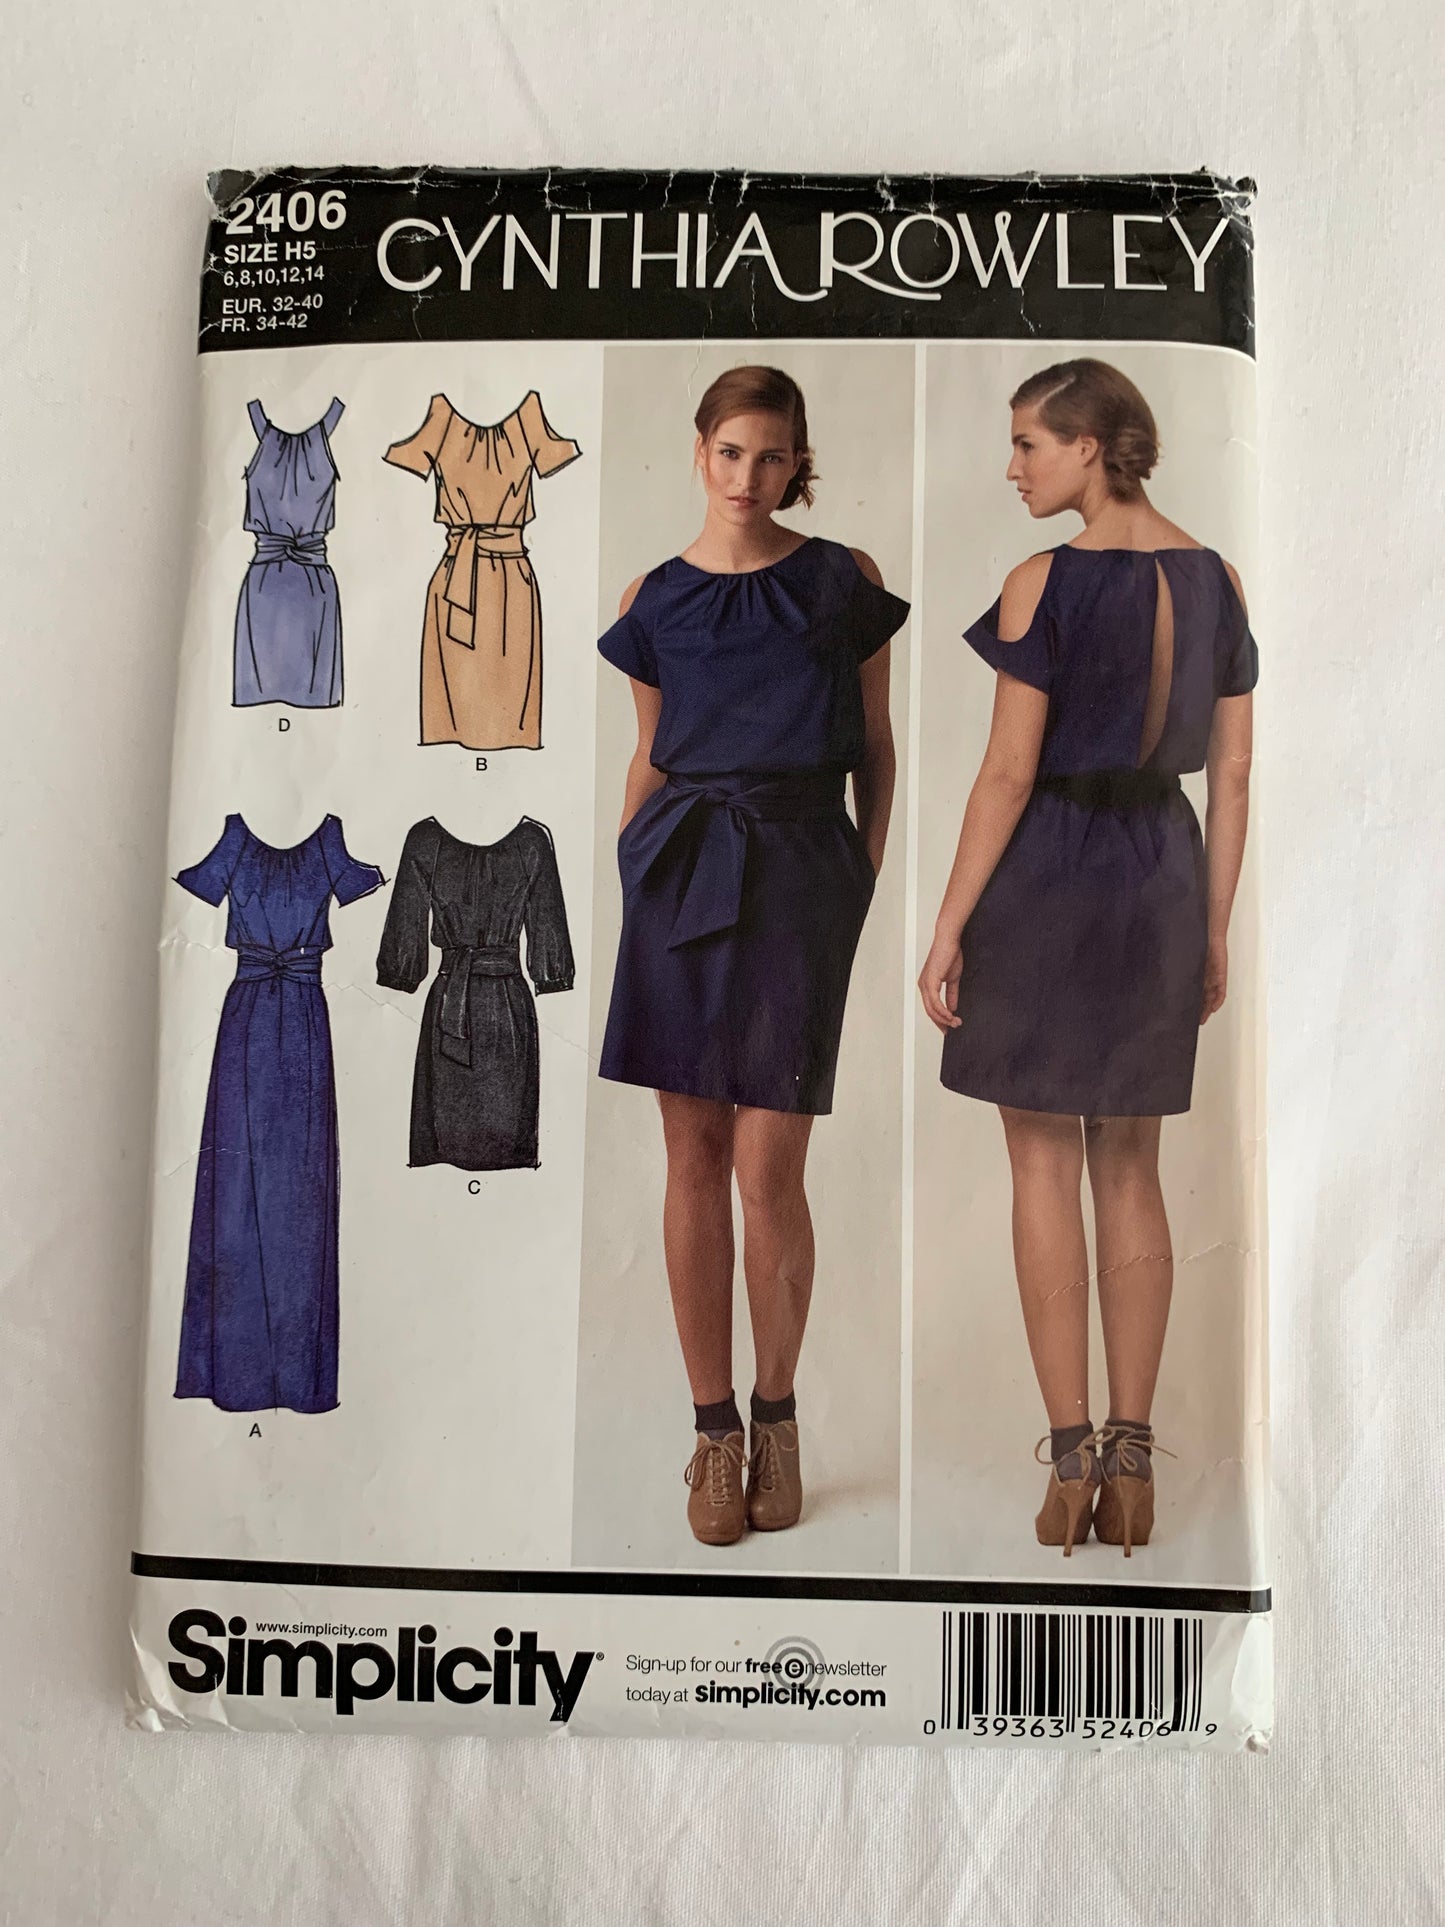 Cynthia Rowley Bridemaids' Dress Collection